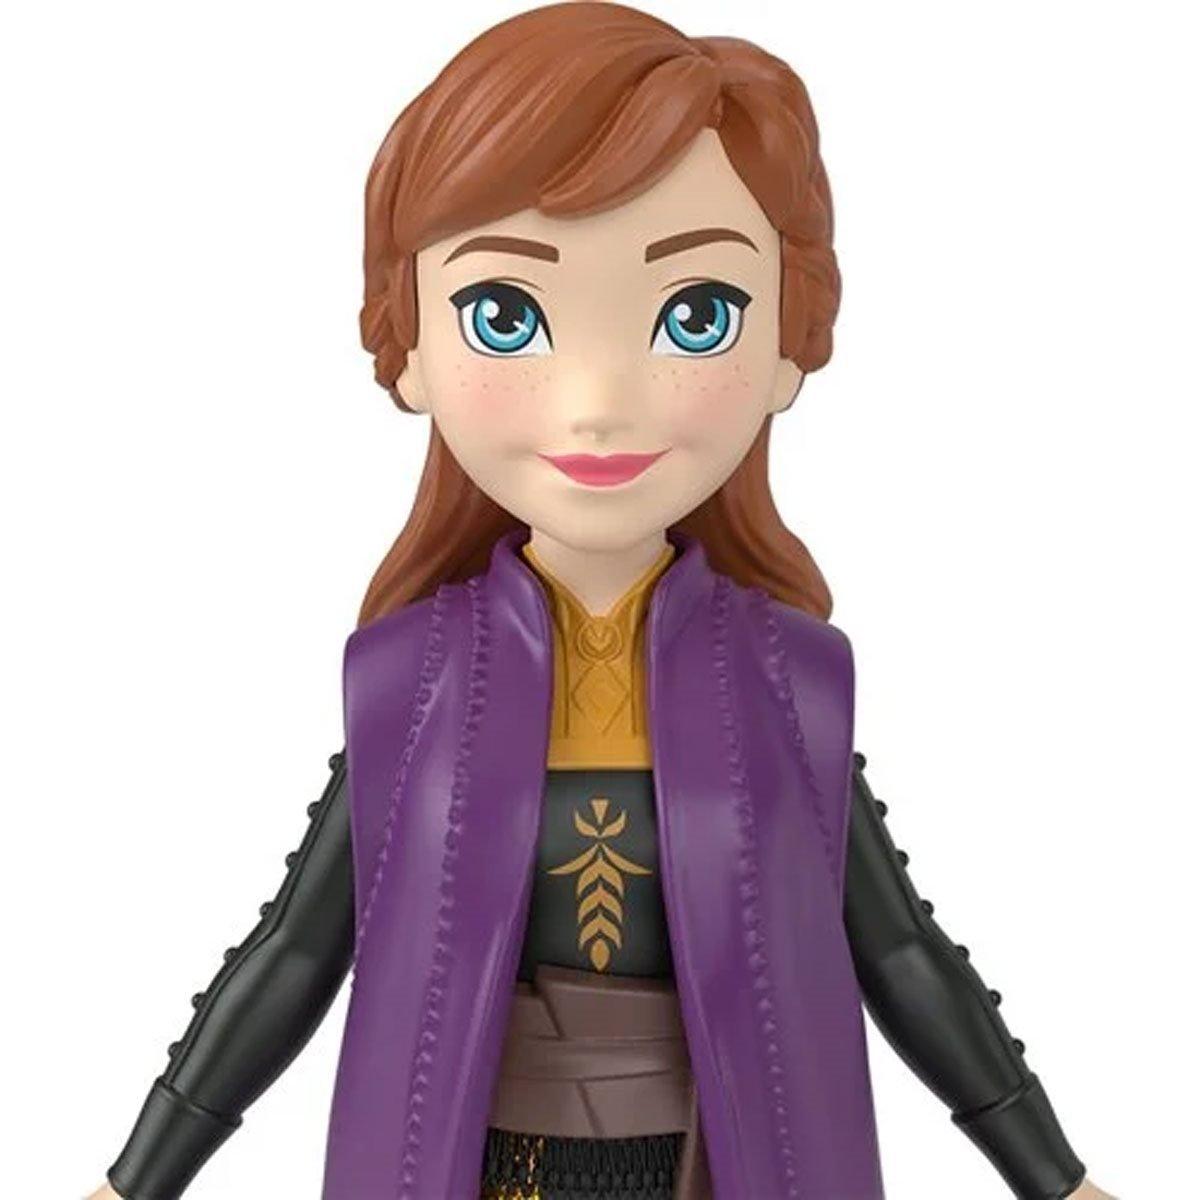 Disney Frozen 2 Toys Anna Small Doll - BumbleToys - 5-7 Years, Boys, Disney Princess, dup-review-publication, Fashion Dolls & Accessories, Girls, Mattel, Pre-Order